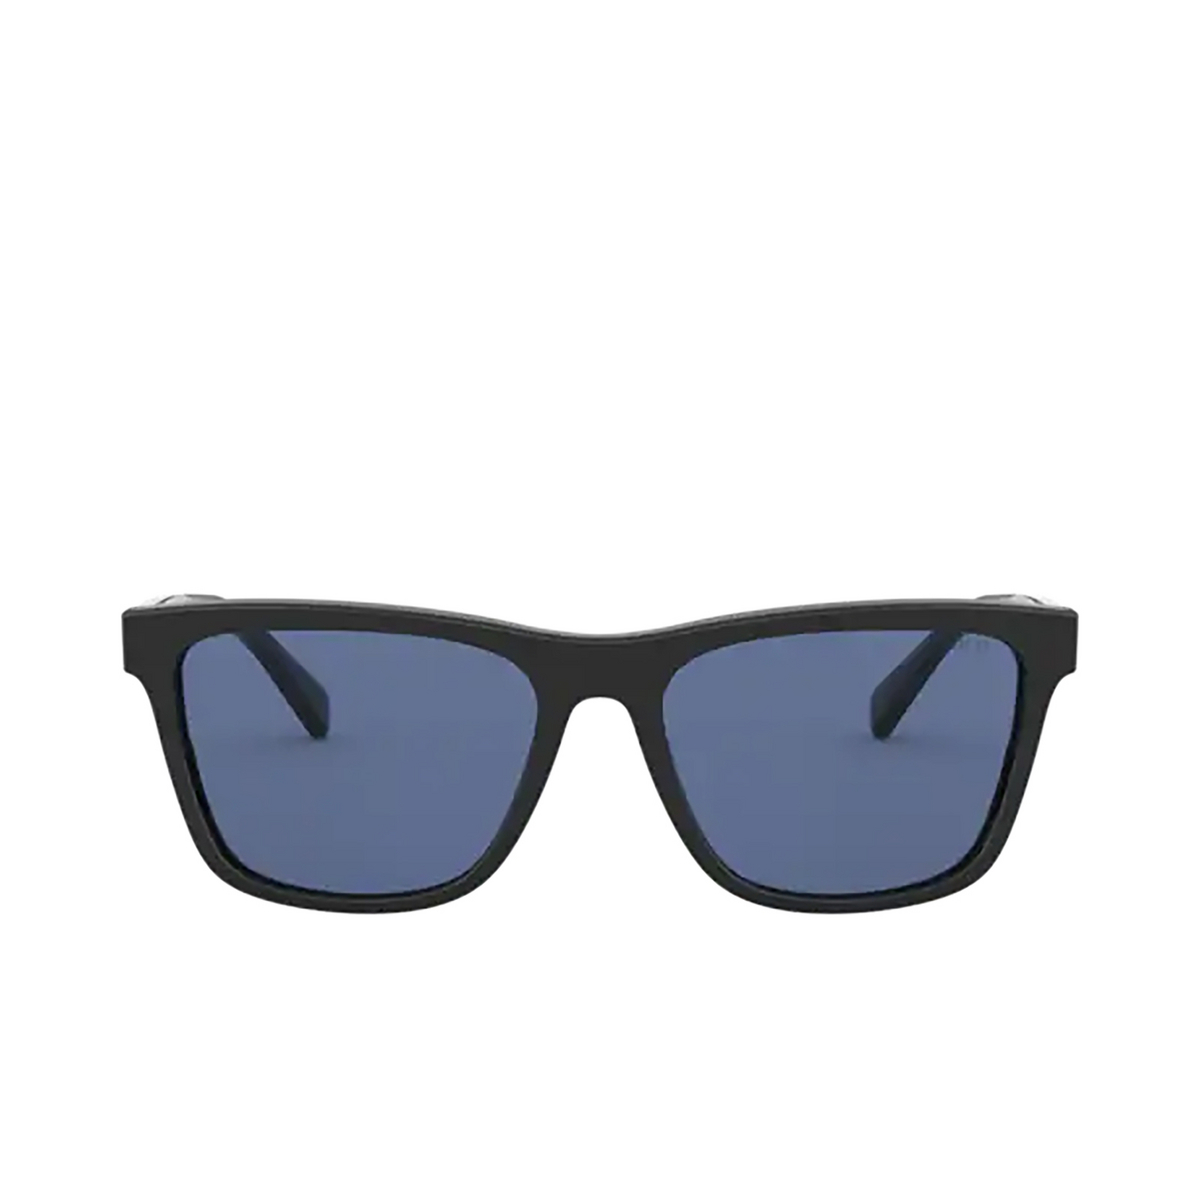 Polo Ralph Lauren® Square Sunglasses: PH4167 color Shiny Black 500180 - front view.